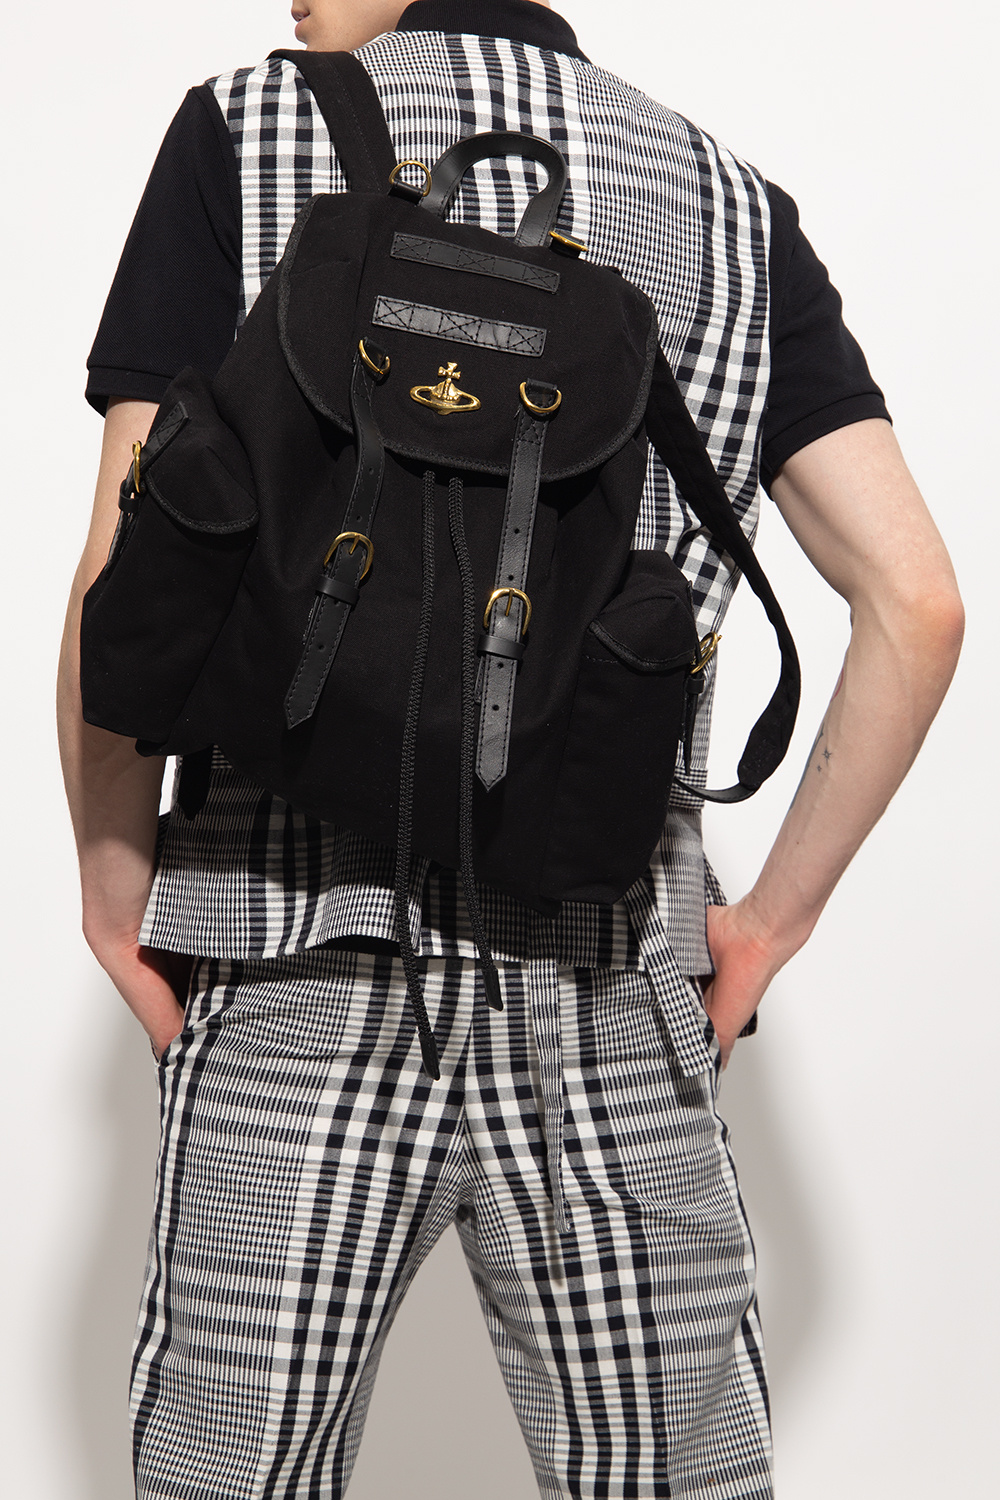 Vivienne Westwood The ‘Made in Kenya’ collection ‘Highland’ backpack